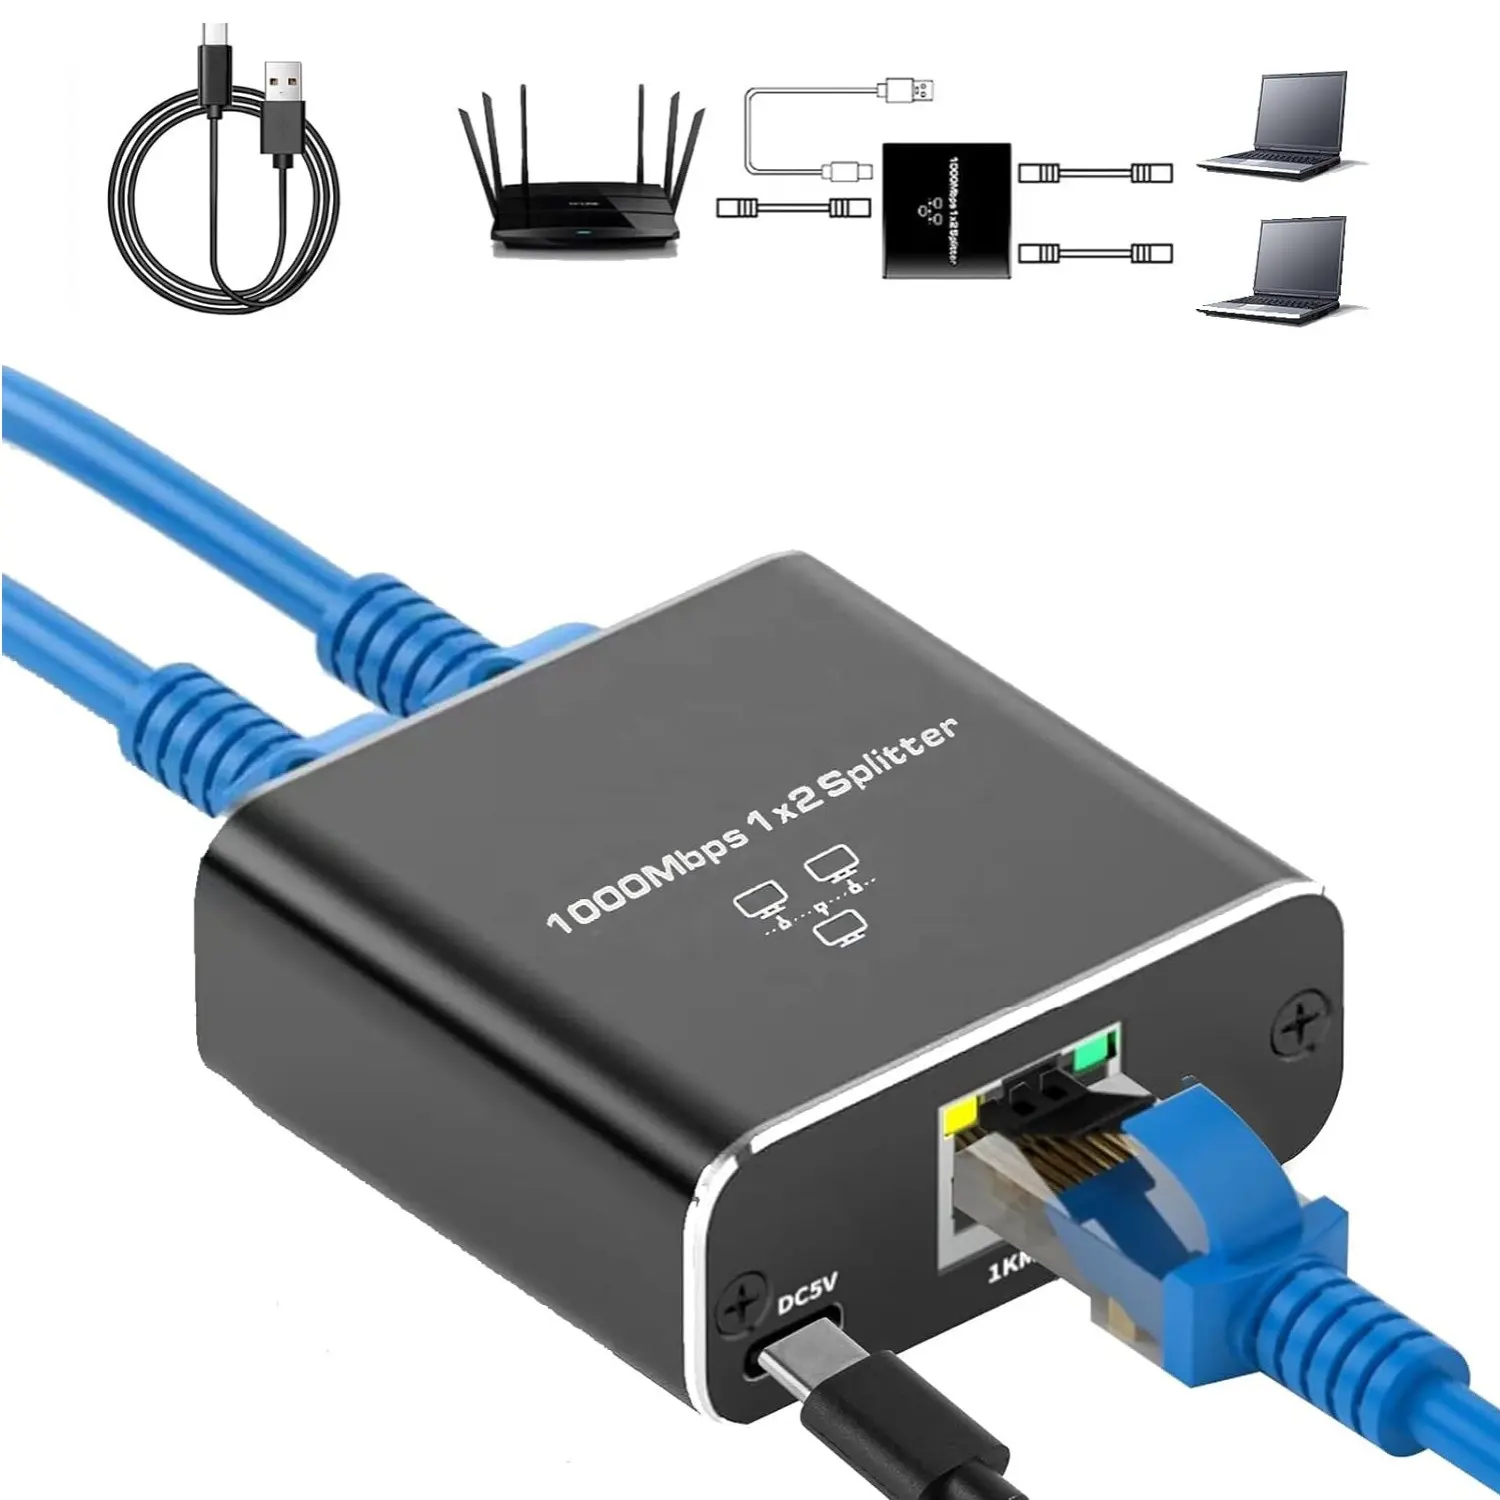 Pemisah Ethernet 1 hingga 2 kecepatan tinggi 1000Mbps, pemisah LAN Gigabit dengan kabel daya USB, pemisah RJ45 untuk Cat5/5e/6/7/8